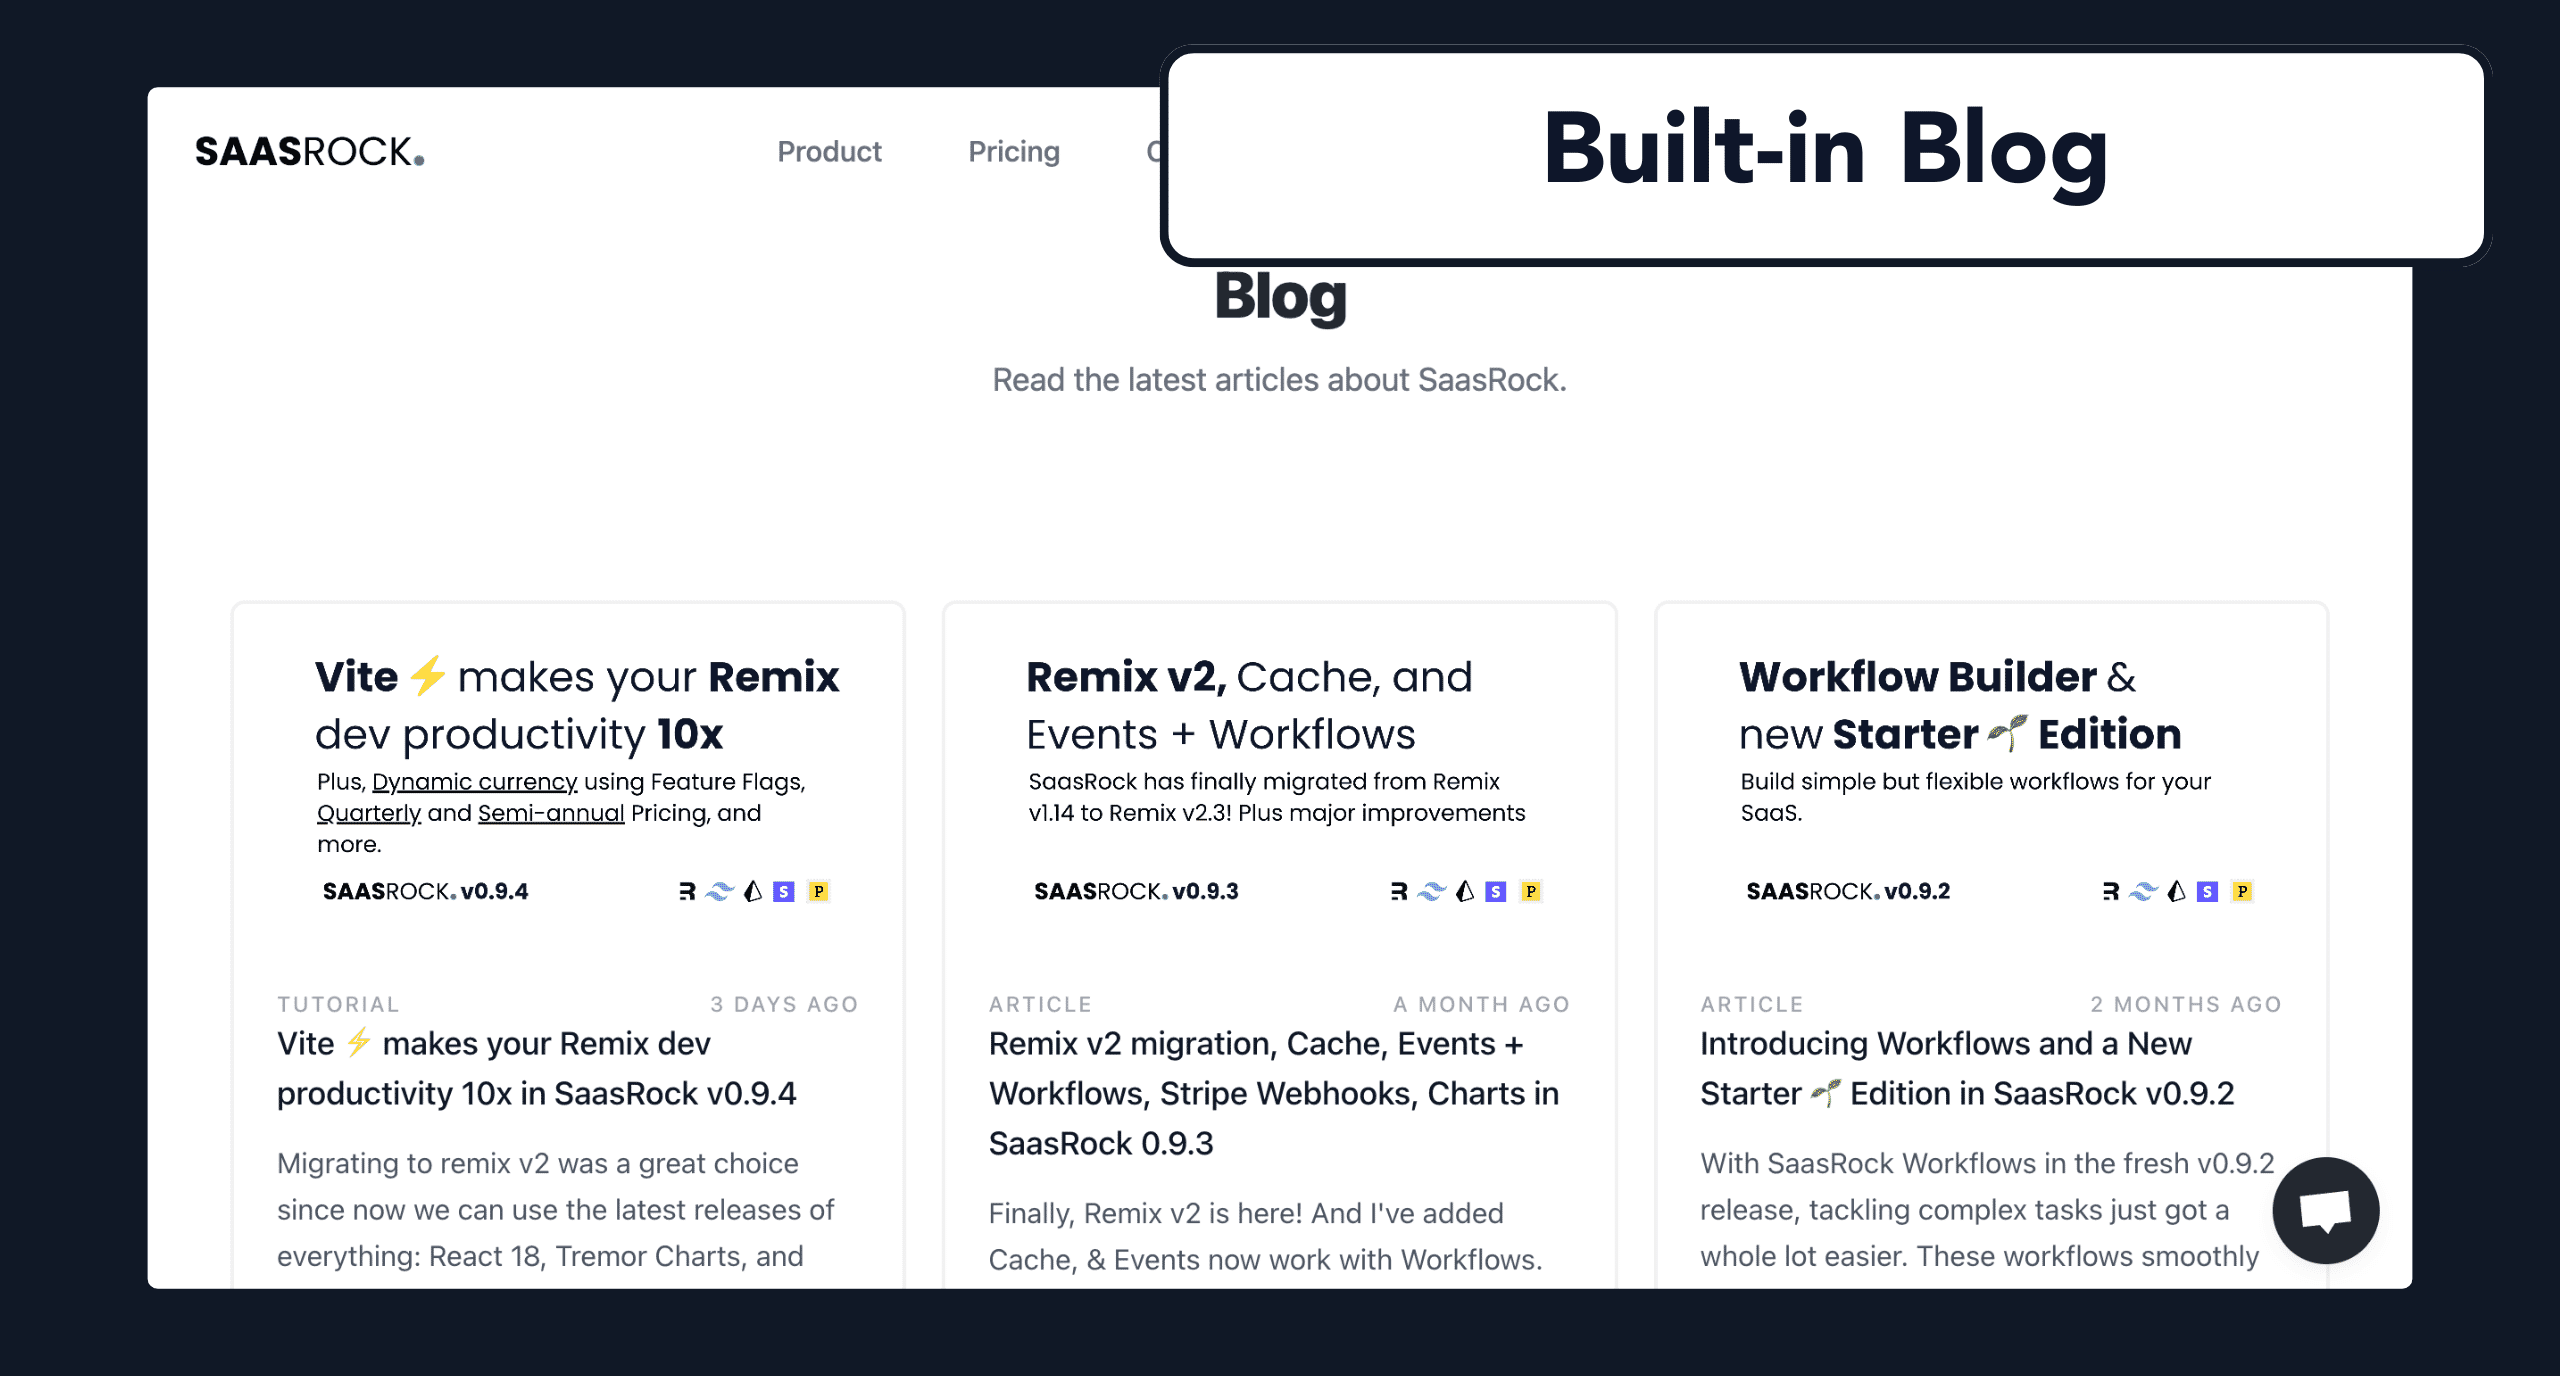 Built-in Blog